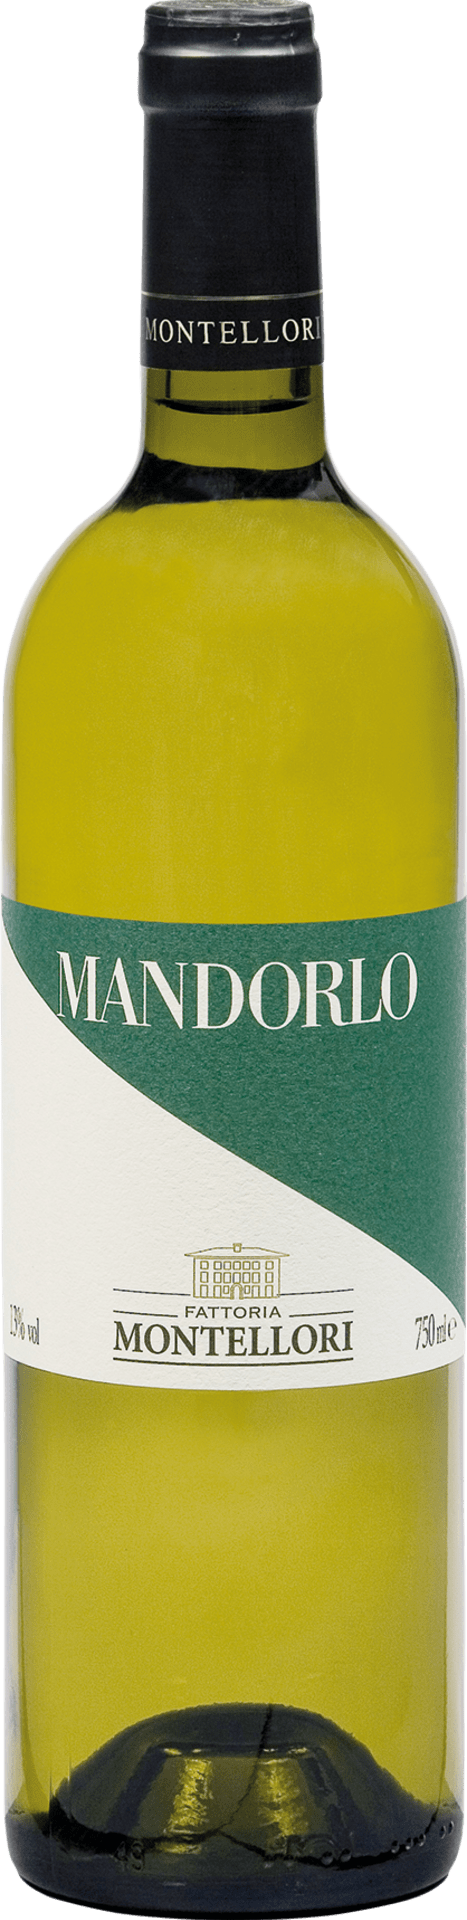 Mandorlo Toscana IGT